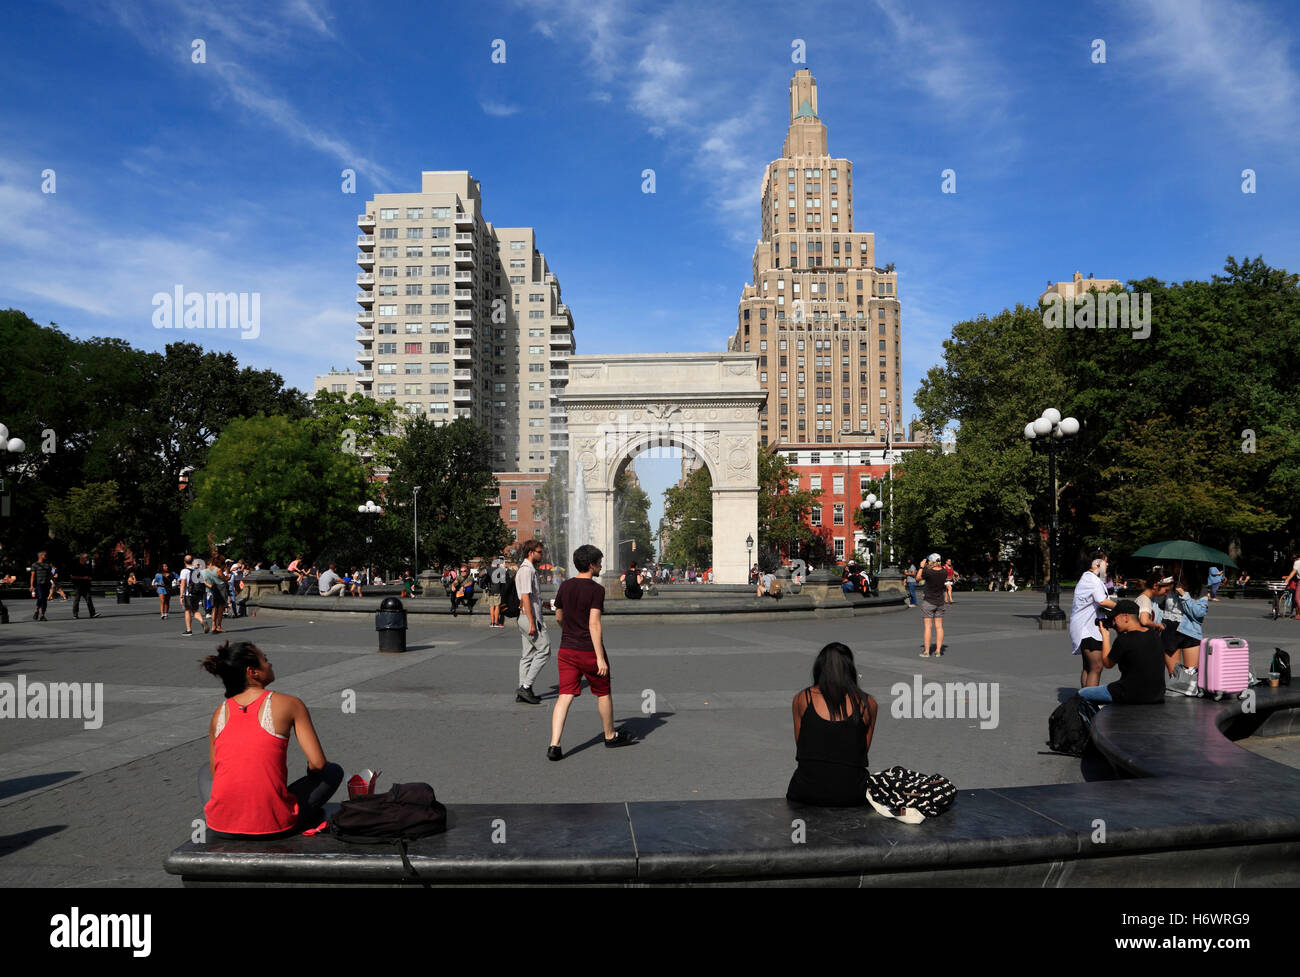 Washington Square Park, Greenwich Village, Manhattan, New York, USA Banque D'Images